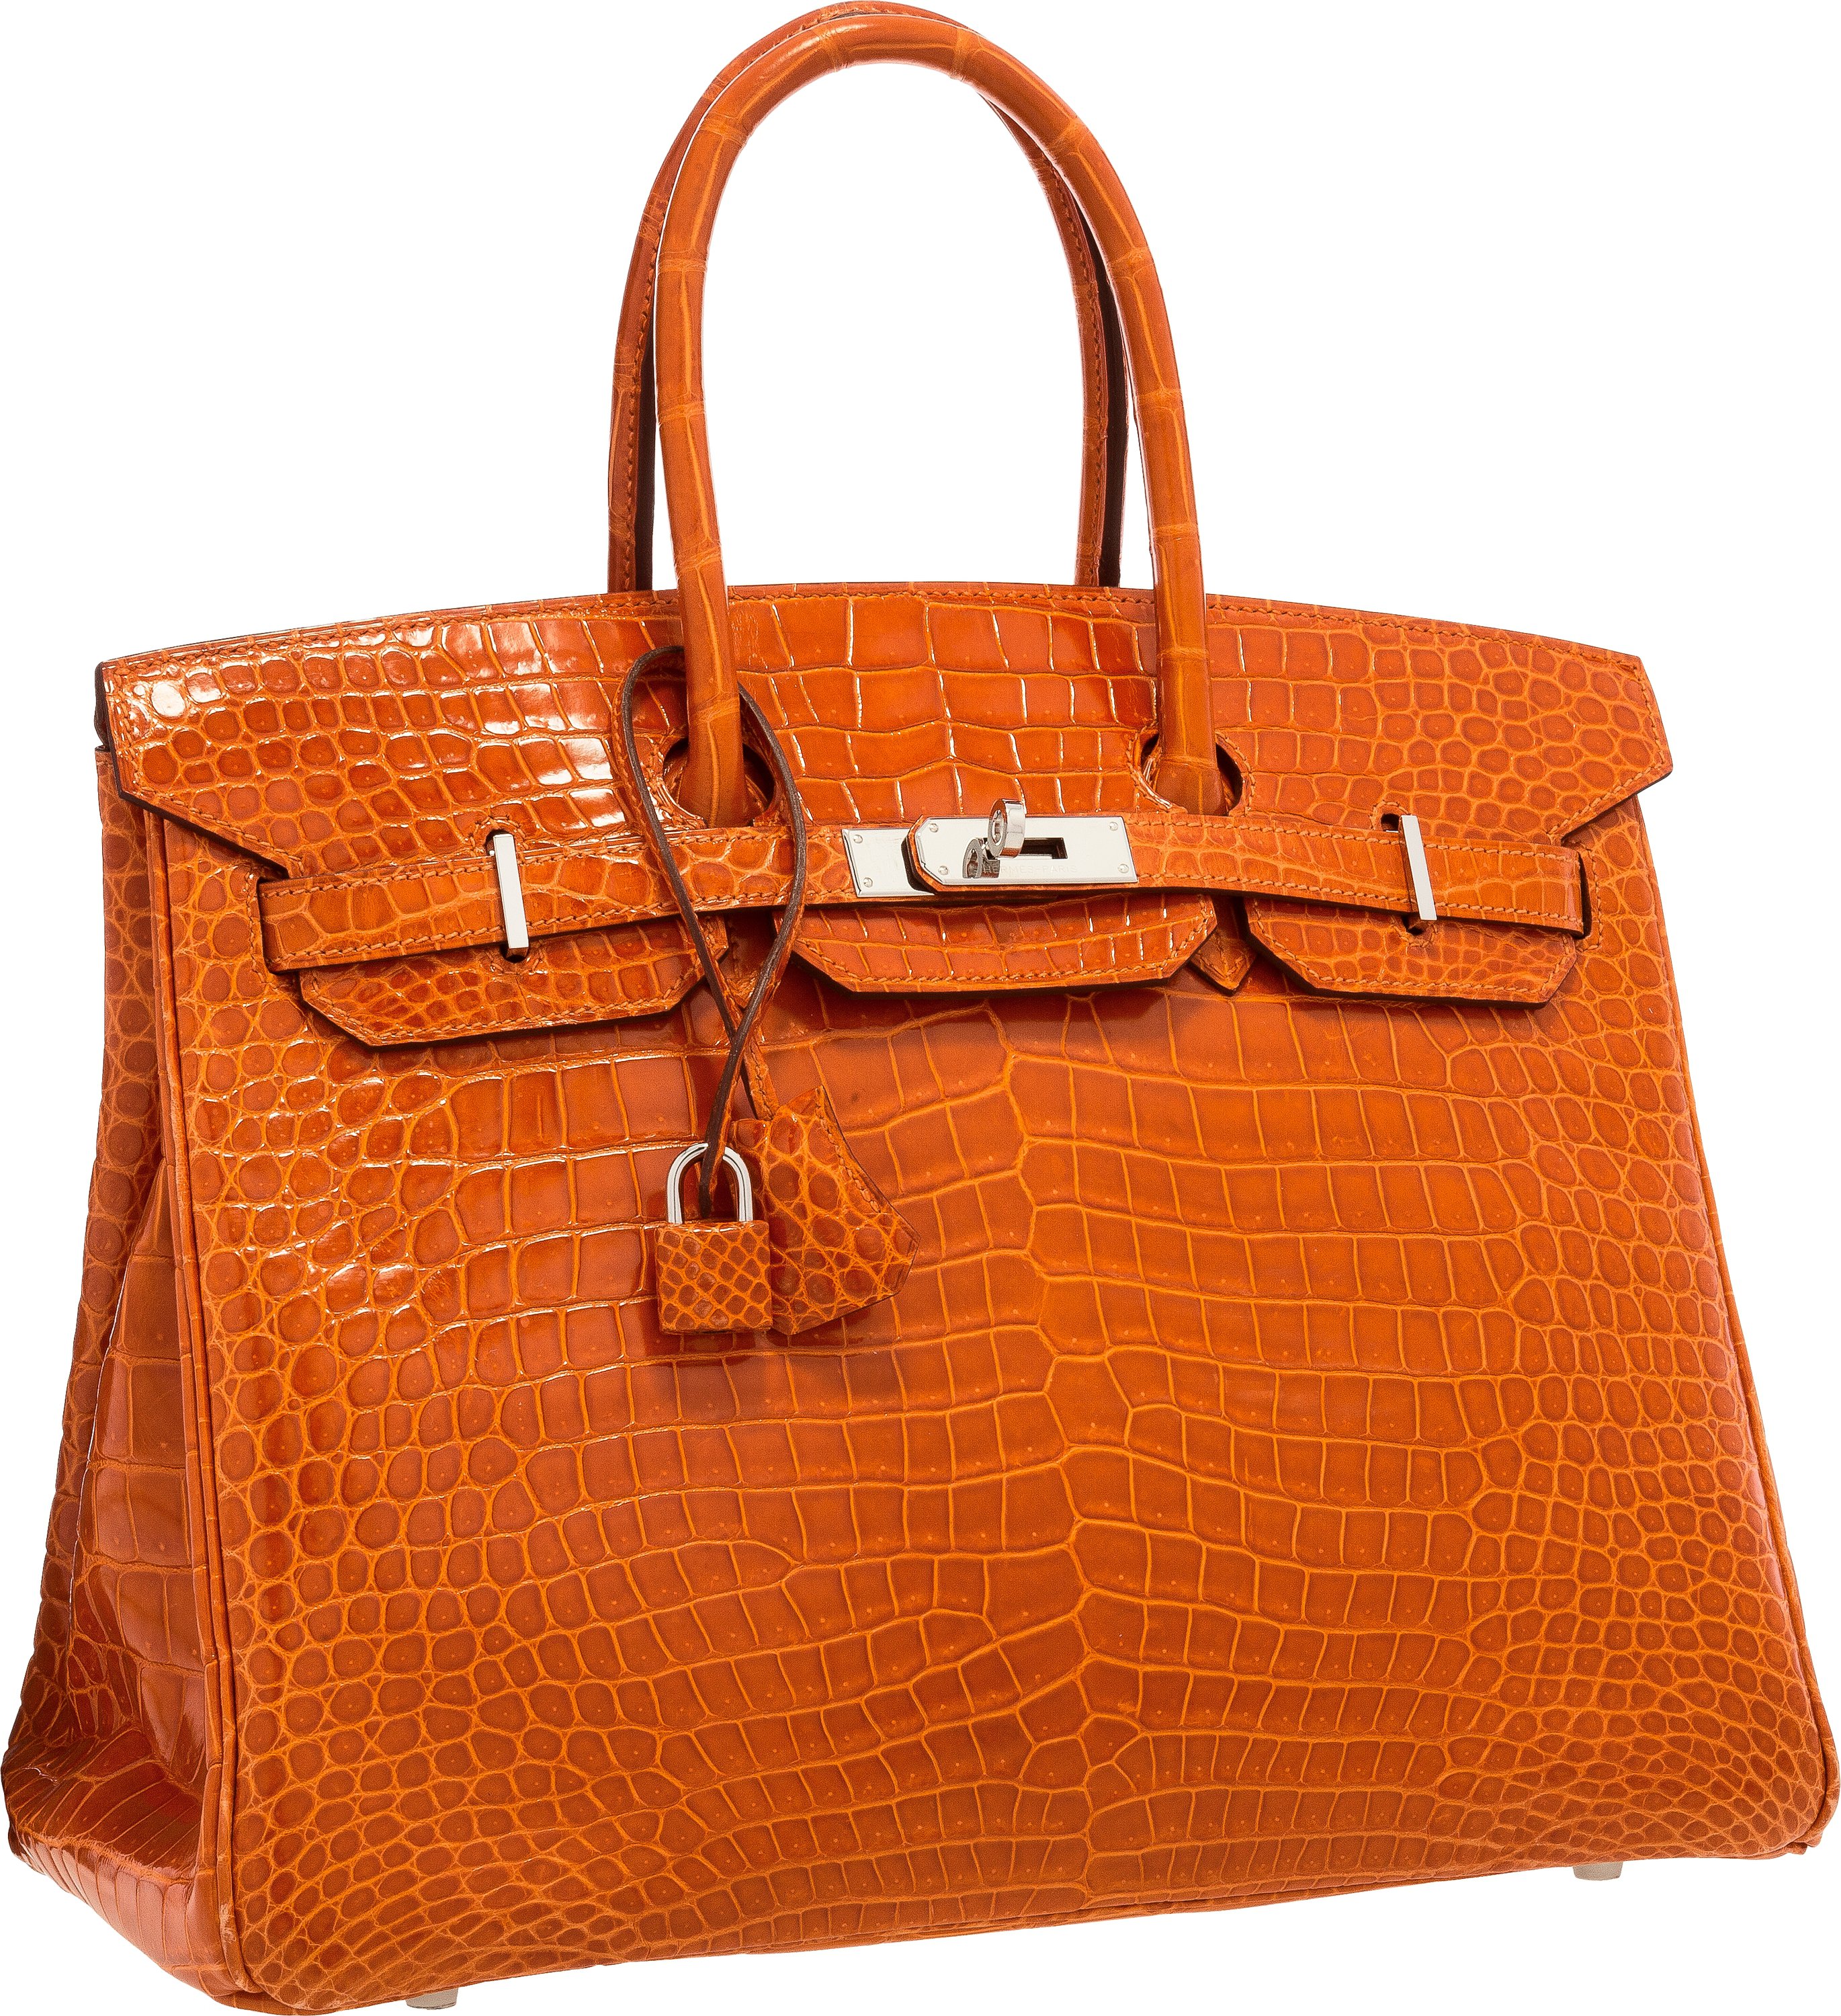 Hermes 35cm Shiny Orange H Porosus Crocodile Birkin Bag, Lot #58279, Heritage Auctions